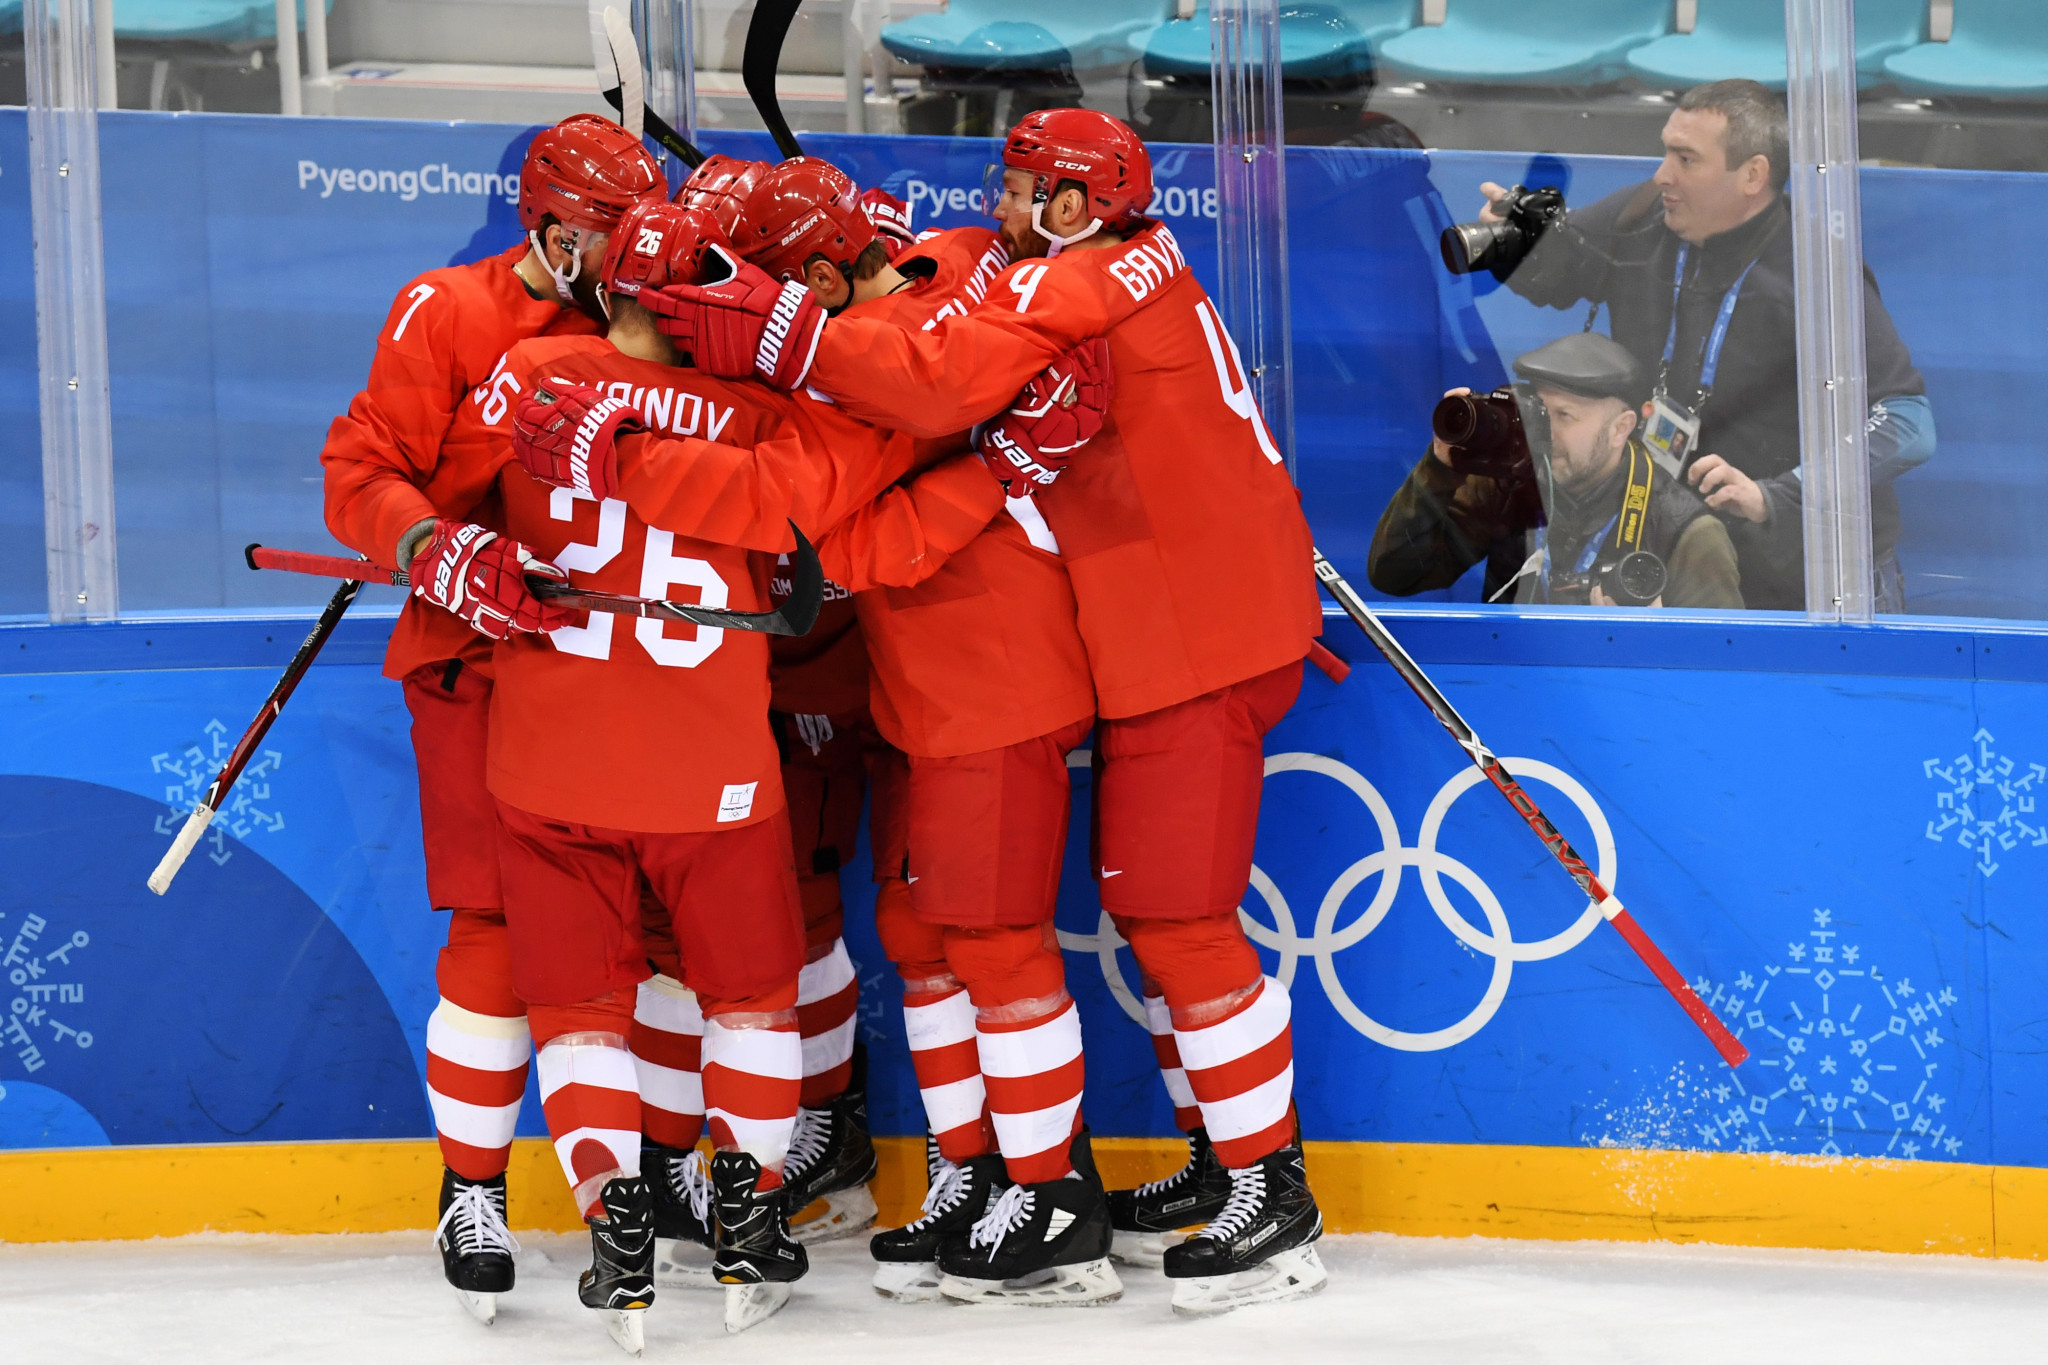 Seven Pyeongchang 2018 champions return for ROC men's ice hockey squad for Beijing 2022